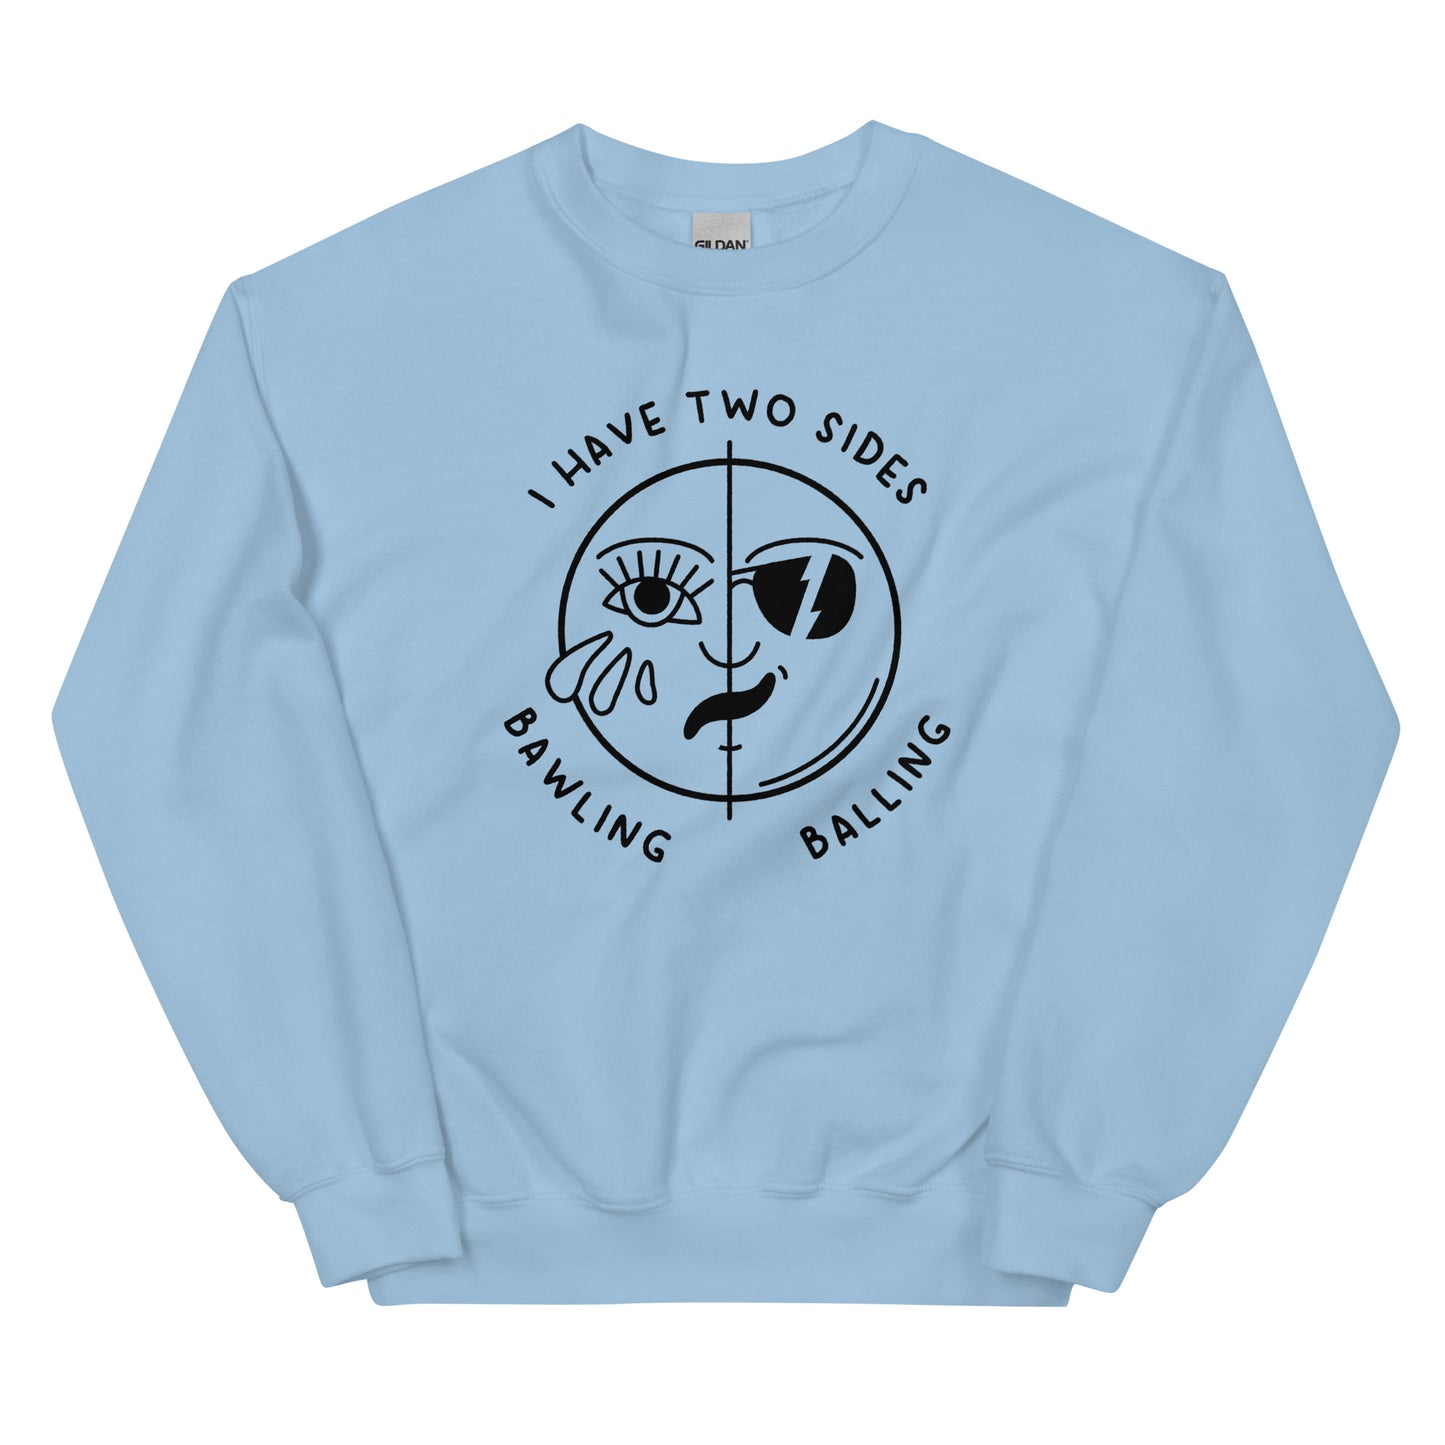 Bawling/Balling Unisex Sweatshirt